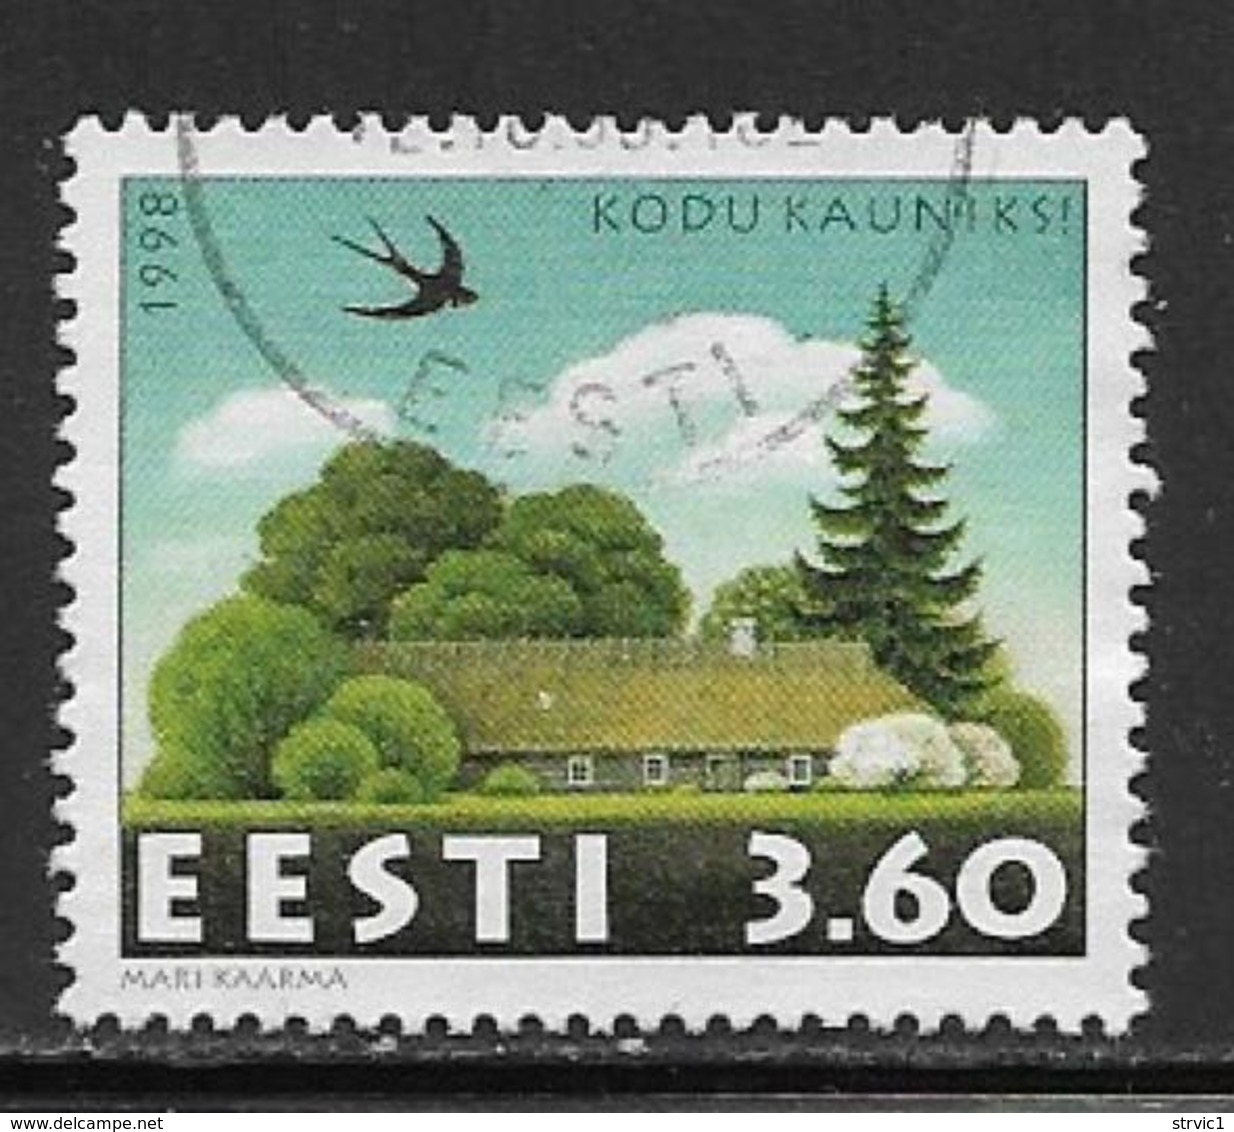 Estonia, Scott #344 Used Beautiful Homes Year, 1998 - Estonia